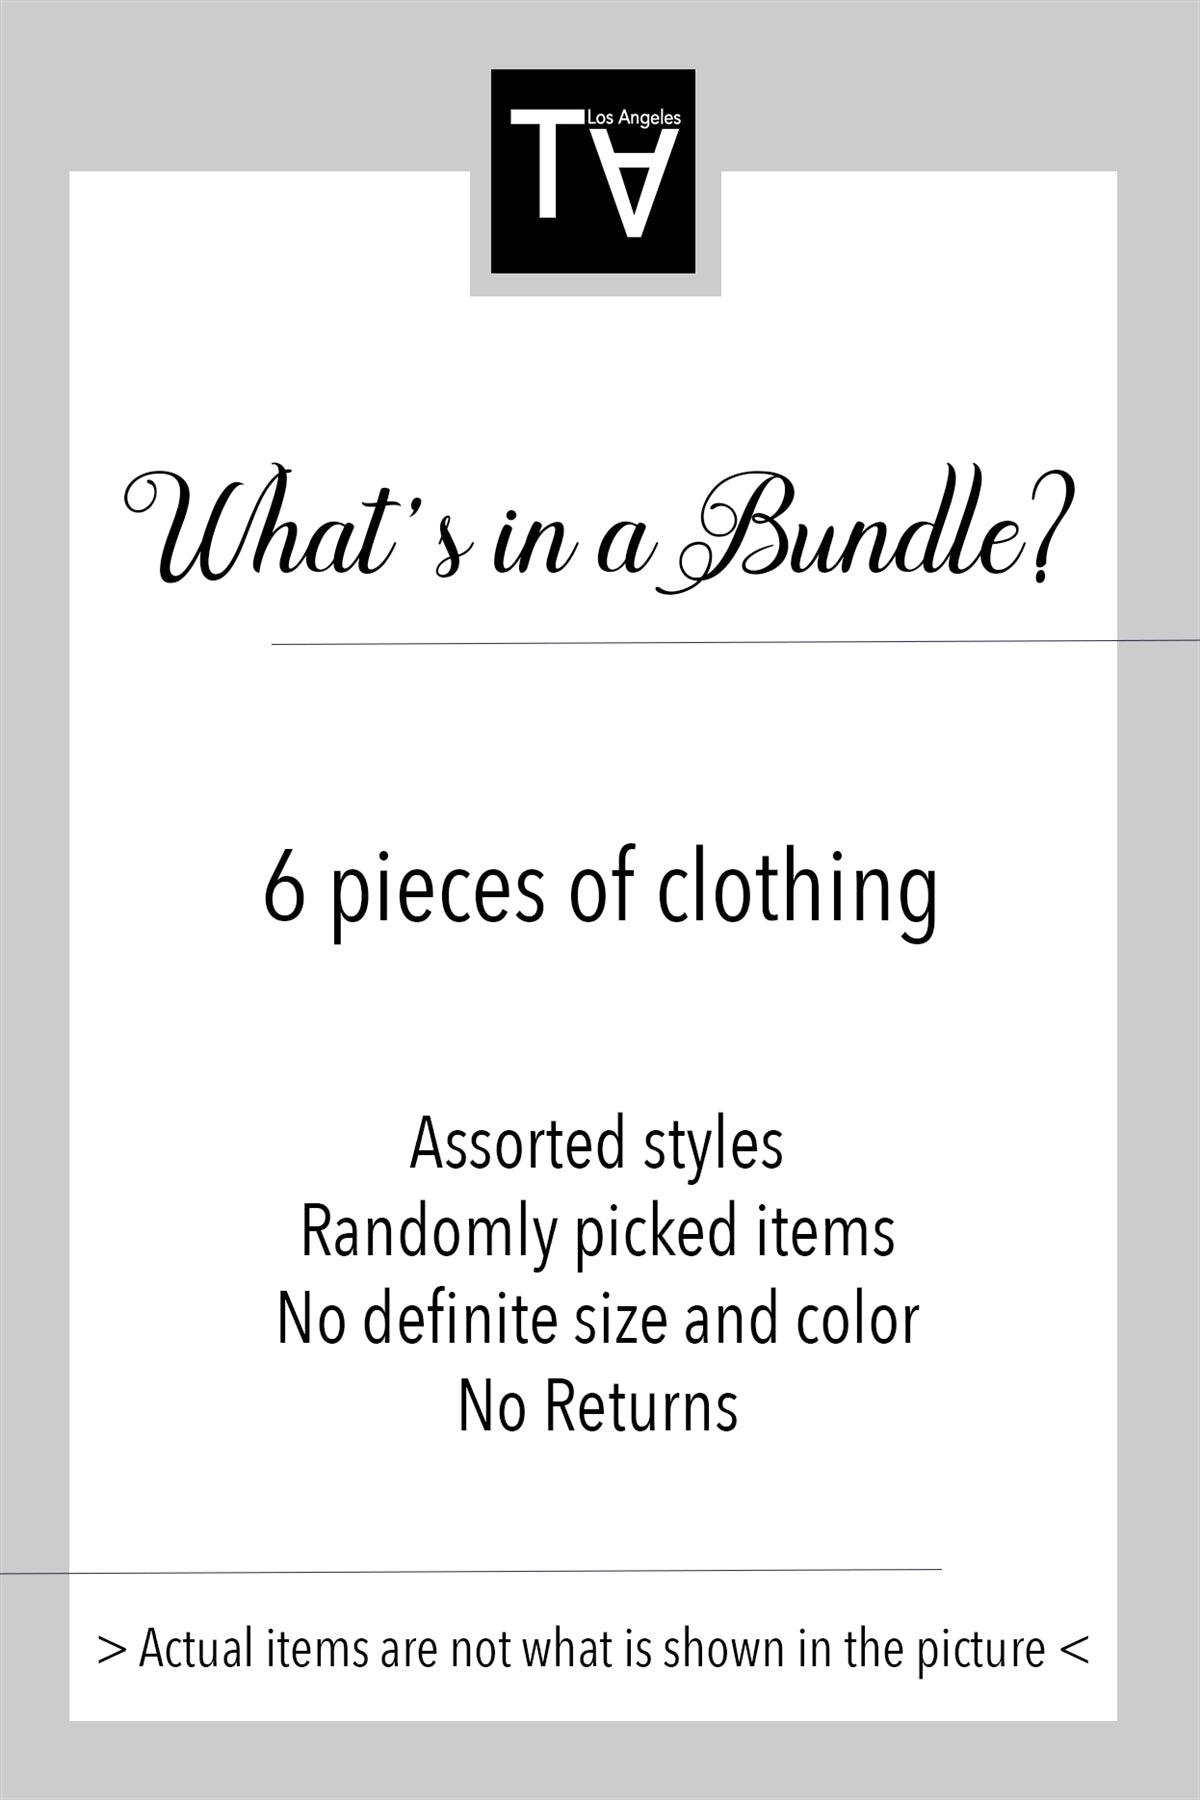 Assorted Women's Clothing / Surprise Box - 6 pcs